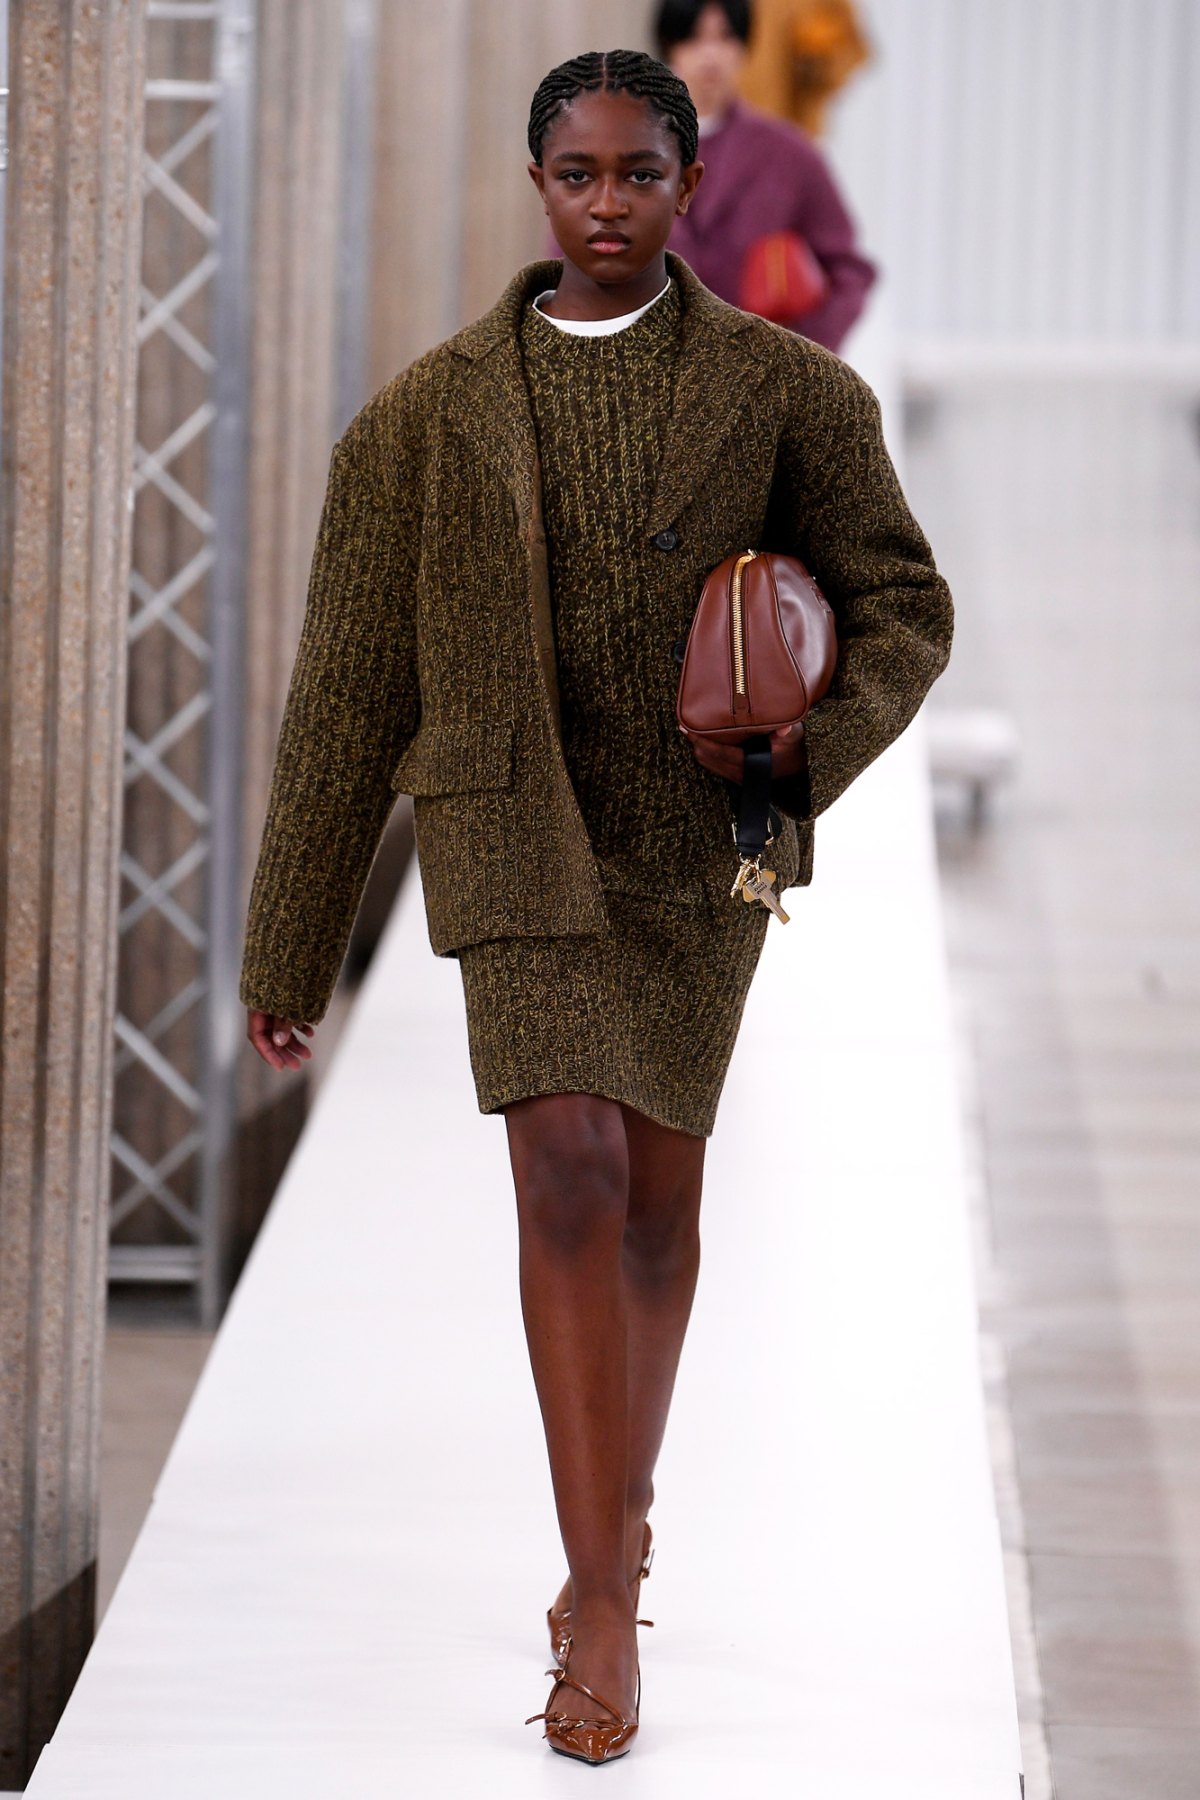 Gabrielle Union And Dwyane Wade Make A Stop At Paris Fashion Week